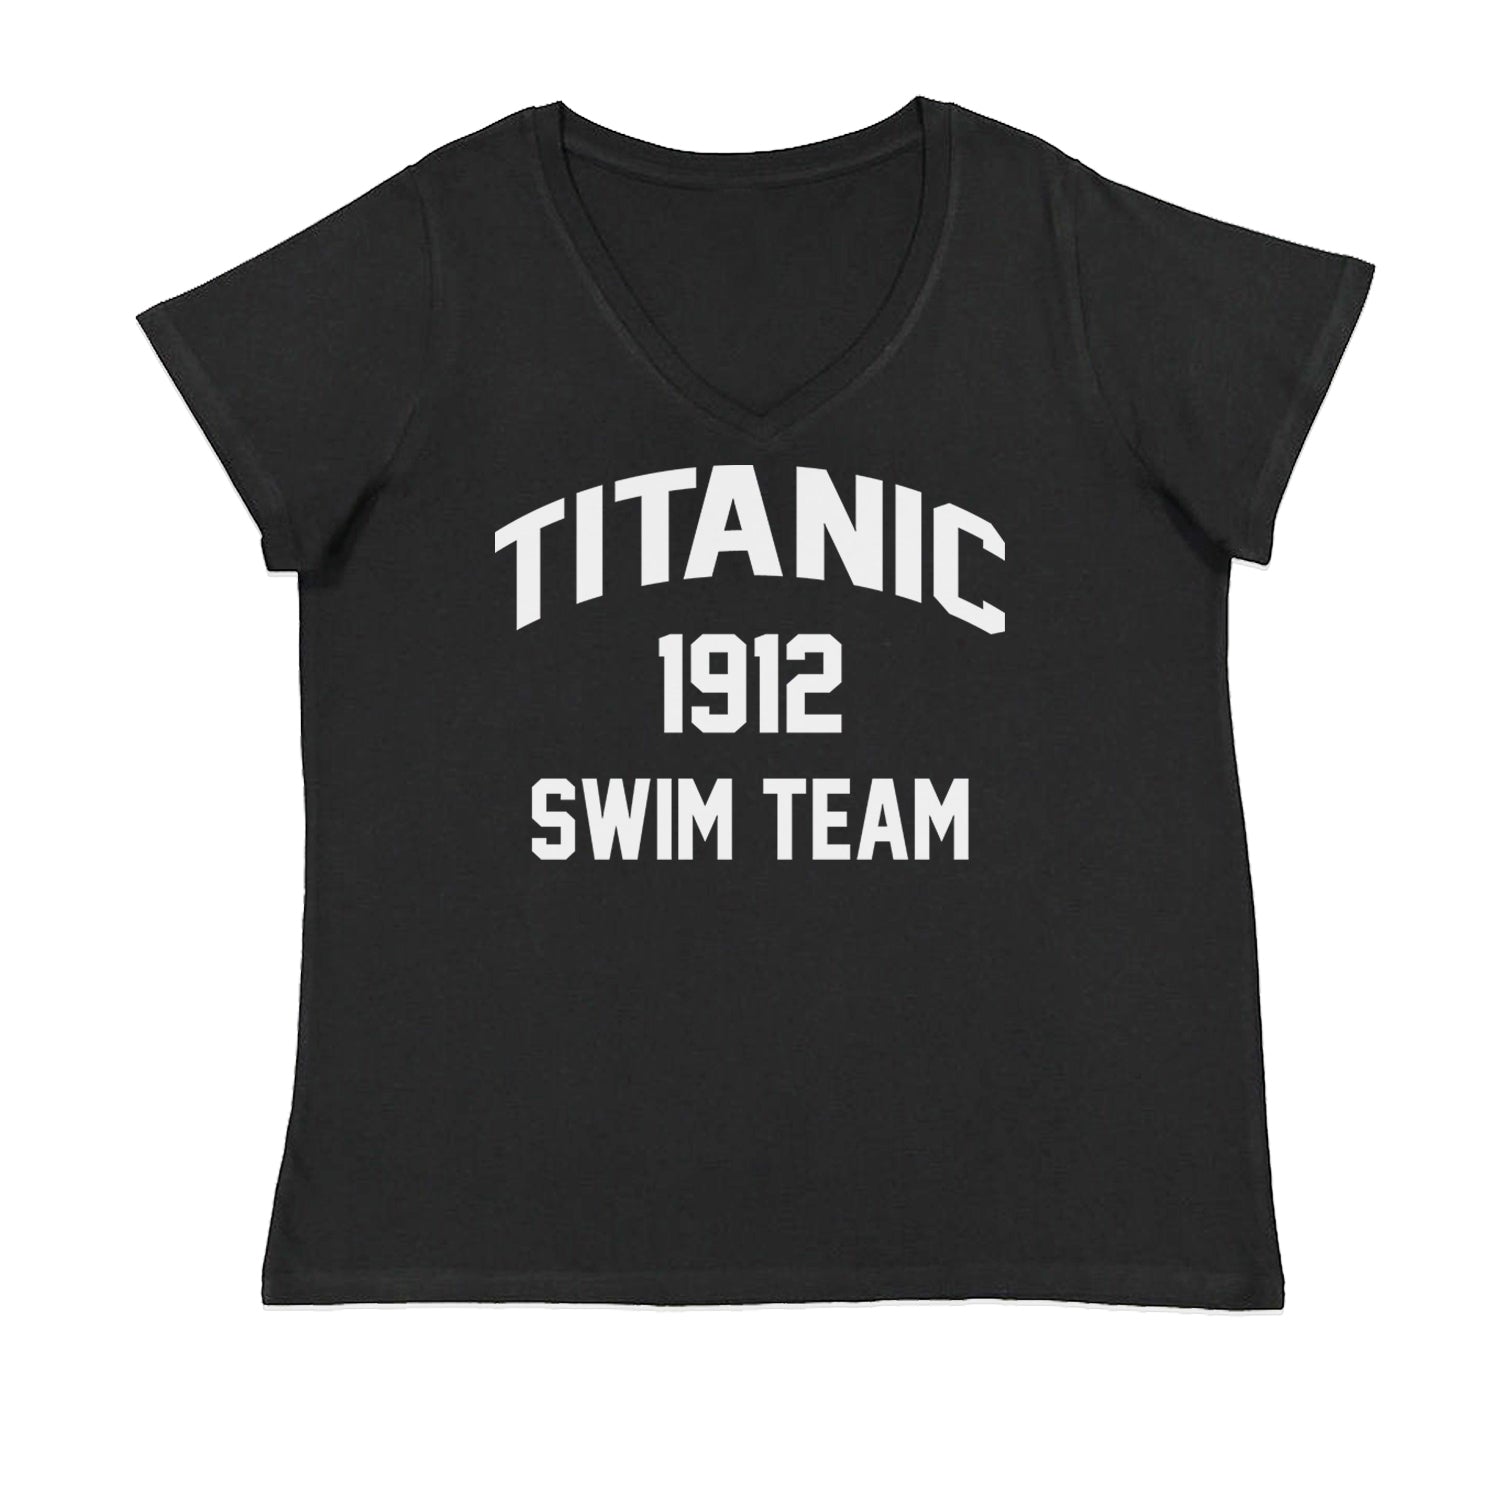 Titanic Swim Team 1912 Funny Cruise Ladies V-Neck T-shirt Black